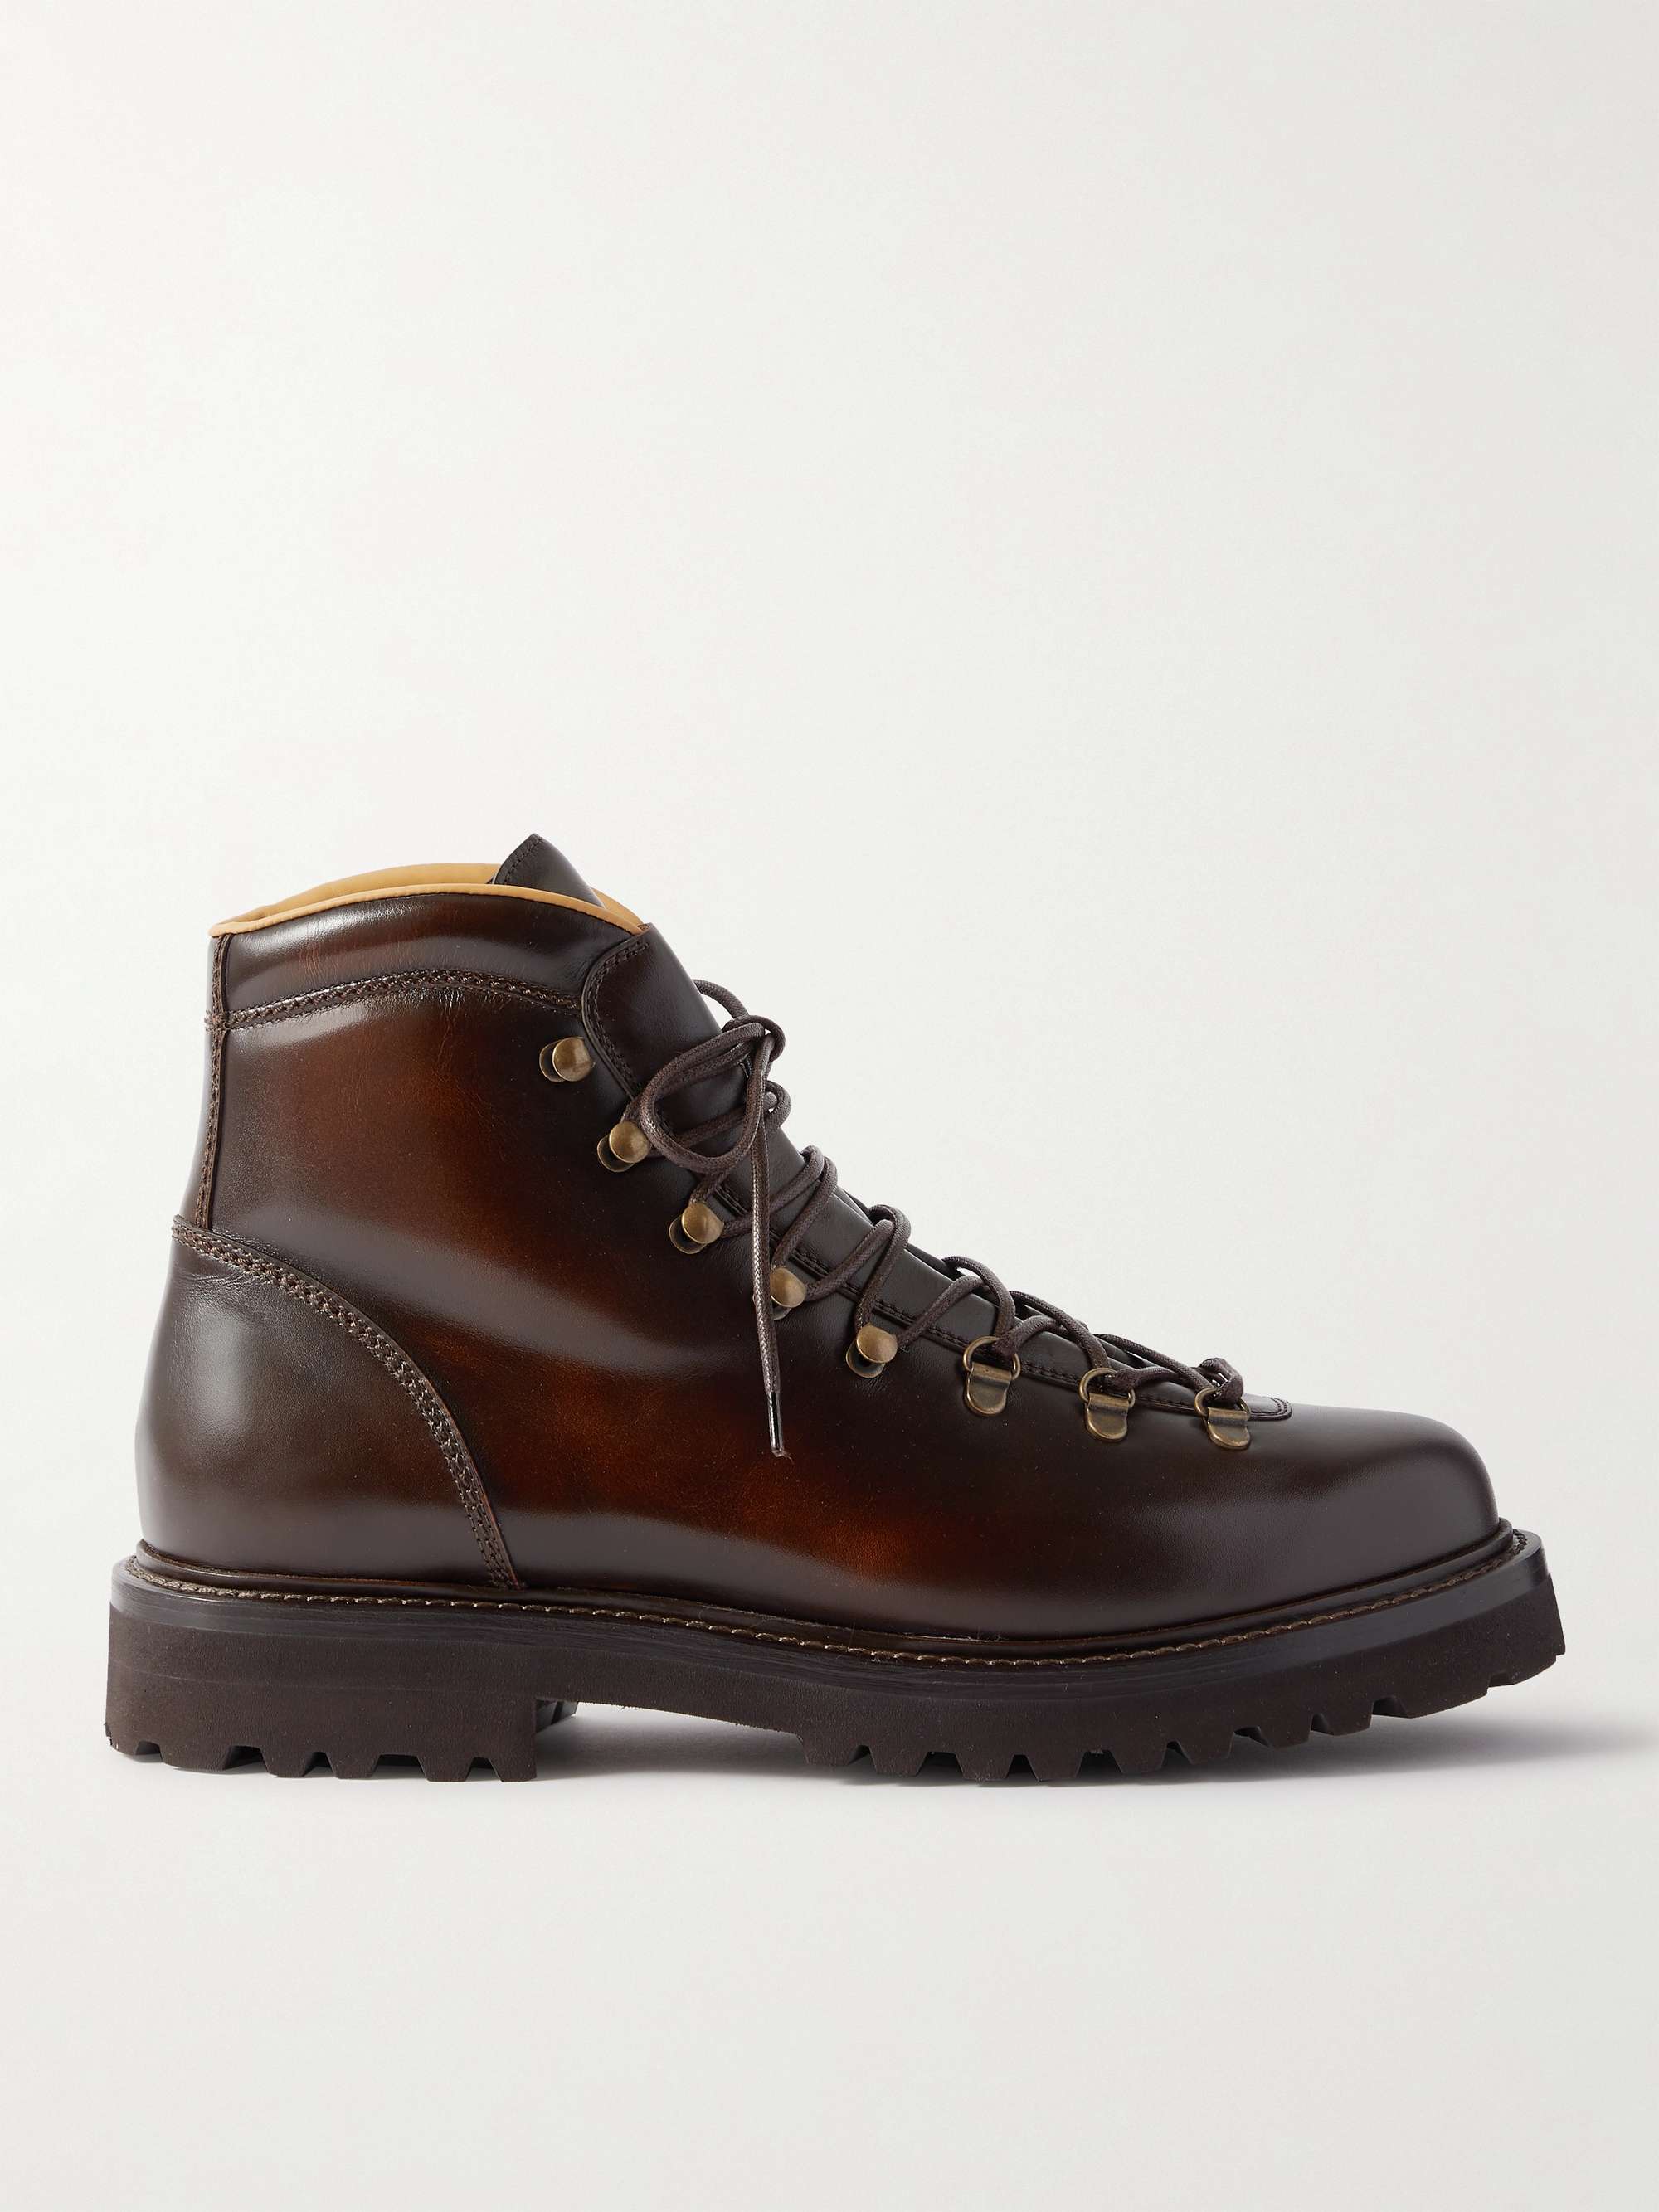 BRUNELLO CUCINELLI Leather Hiking Boots for Men | MR PORTER